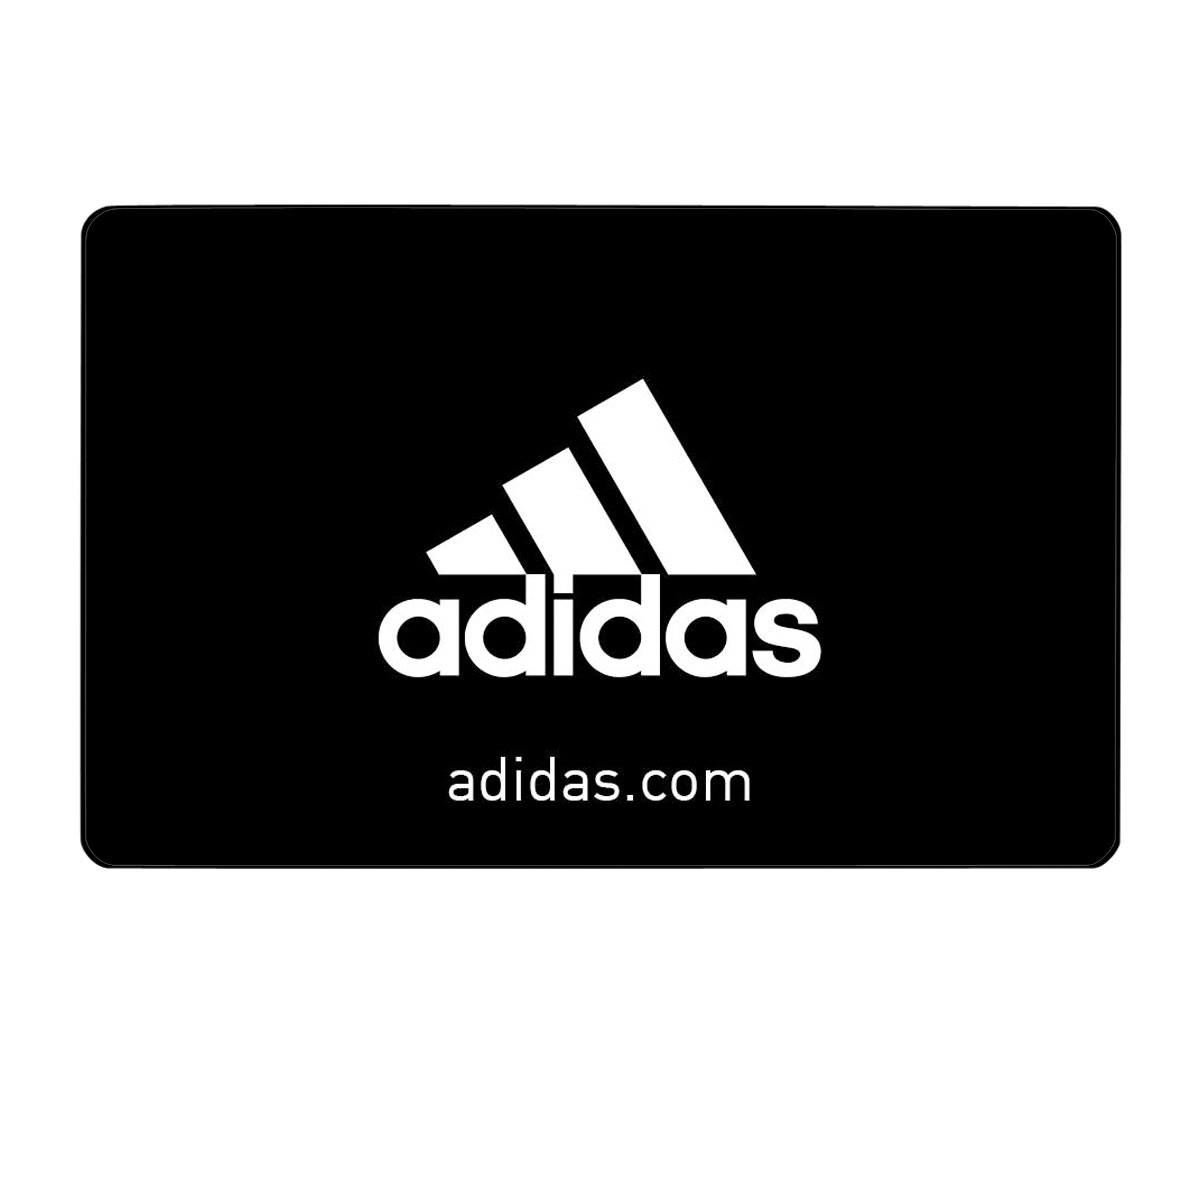 Adidas Gift Card